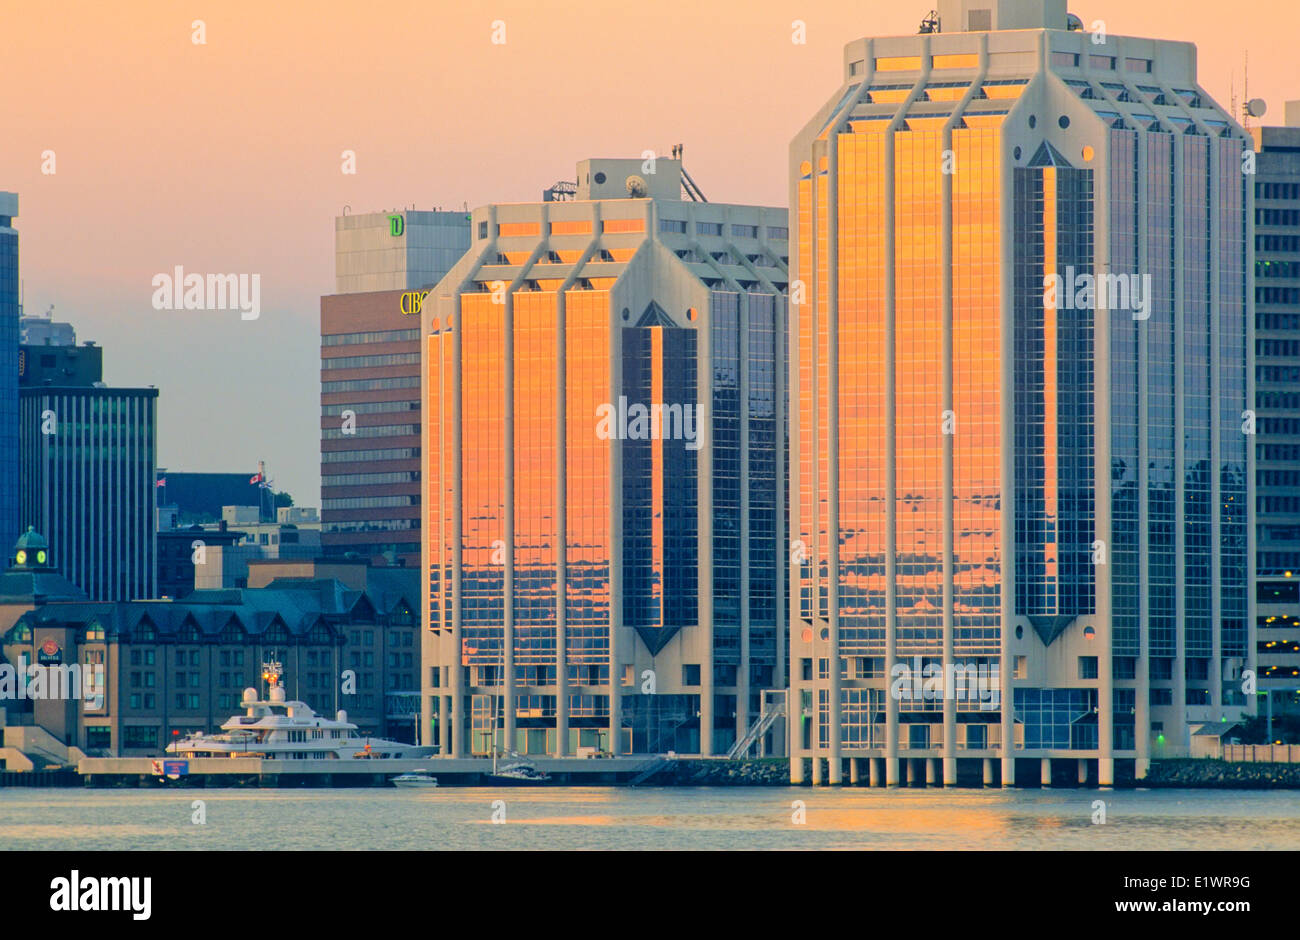 Purdy's Wharf and yatch, Halifax waterfront, Nova Scotia, Canada Stock Photo